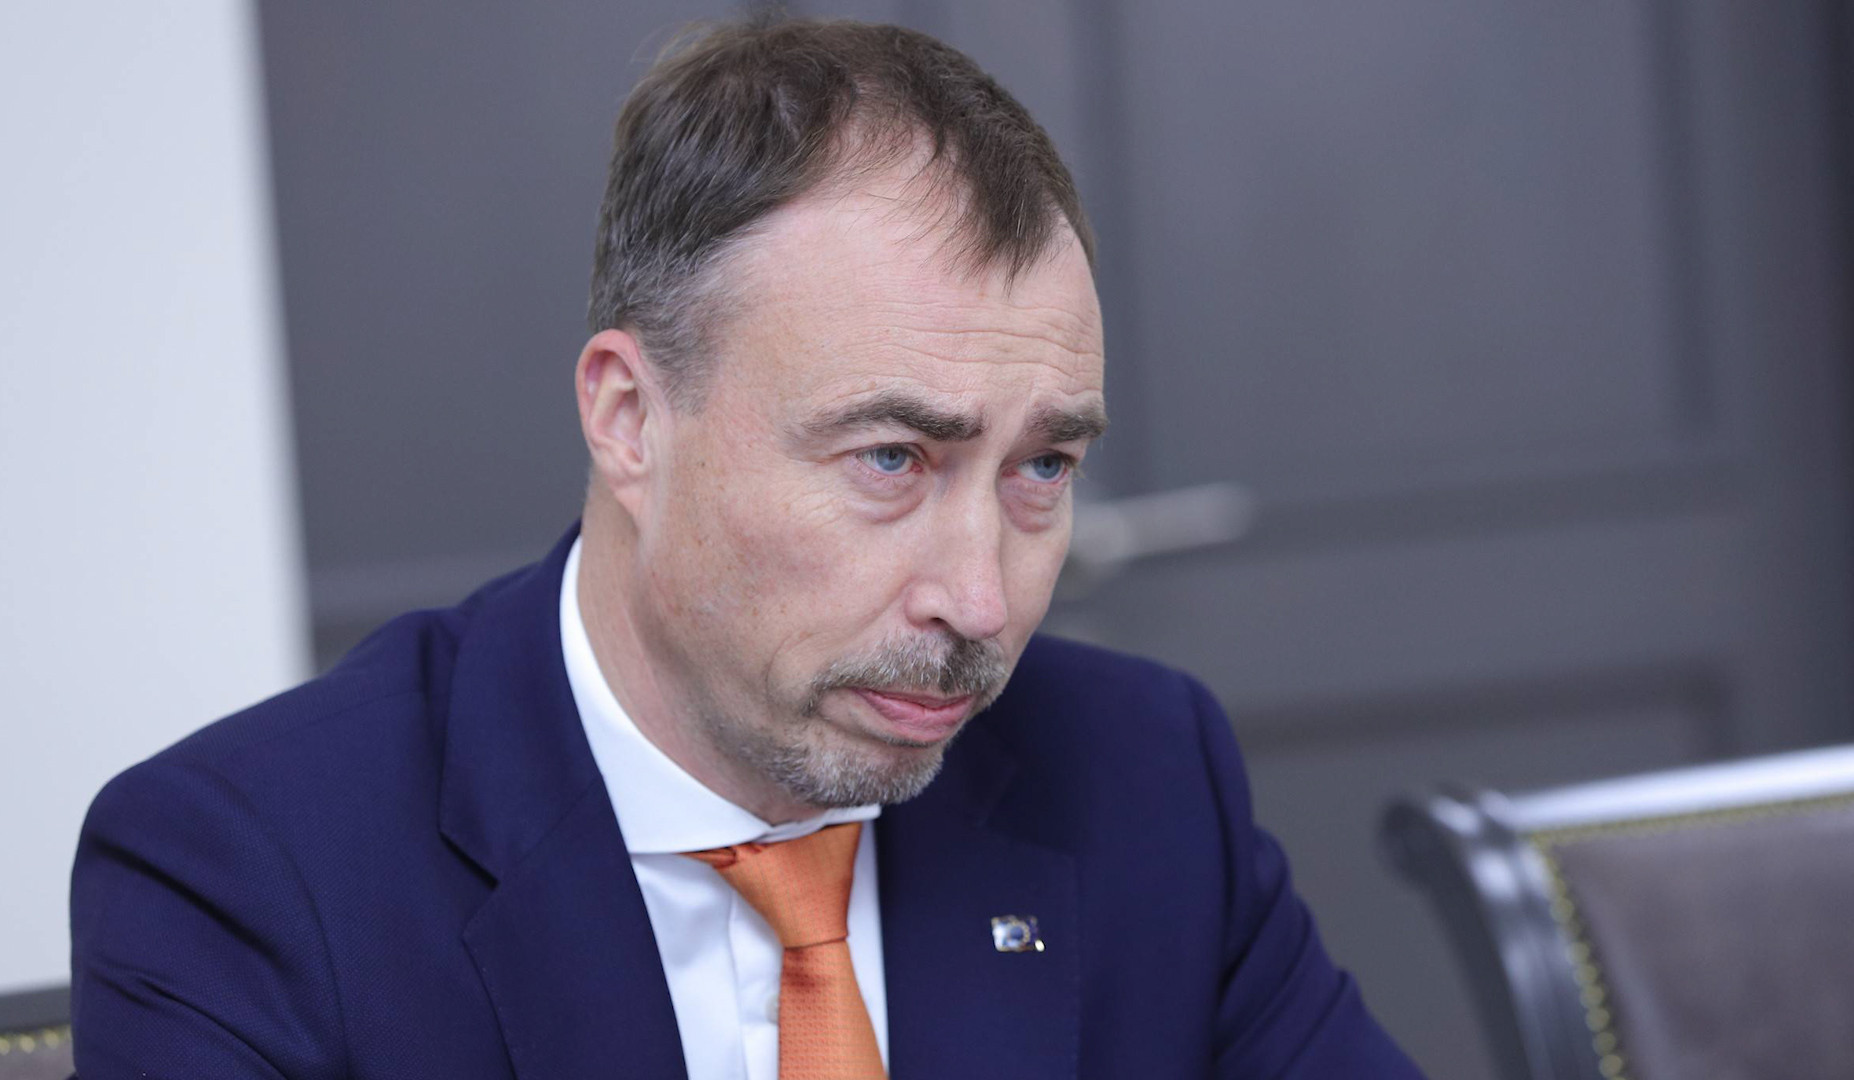 Toivo Klaar on meeting  between Baku representatives and Karabakh Armenians